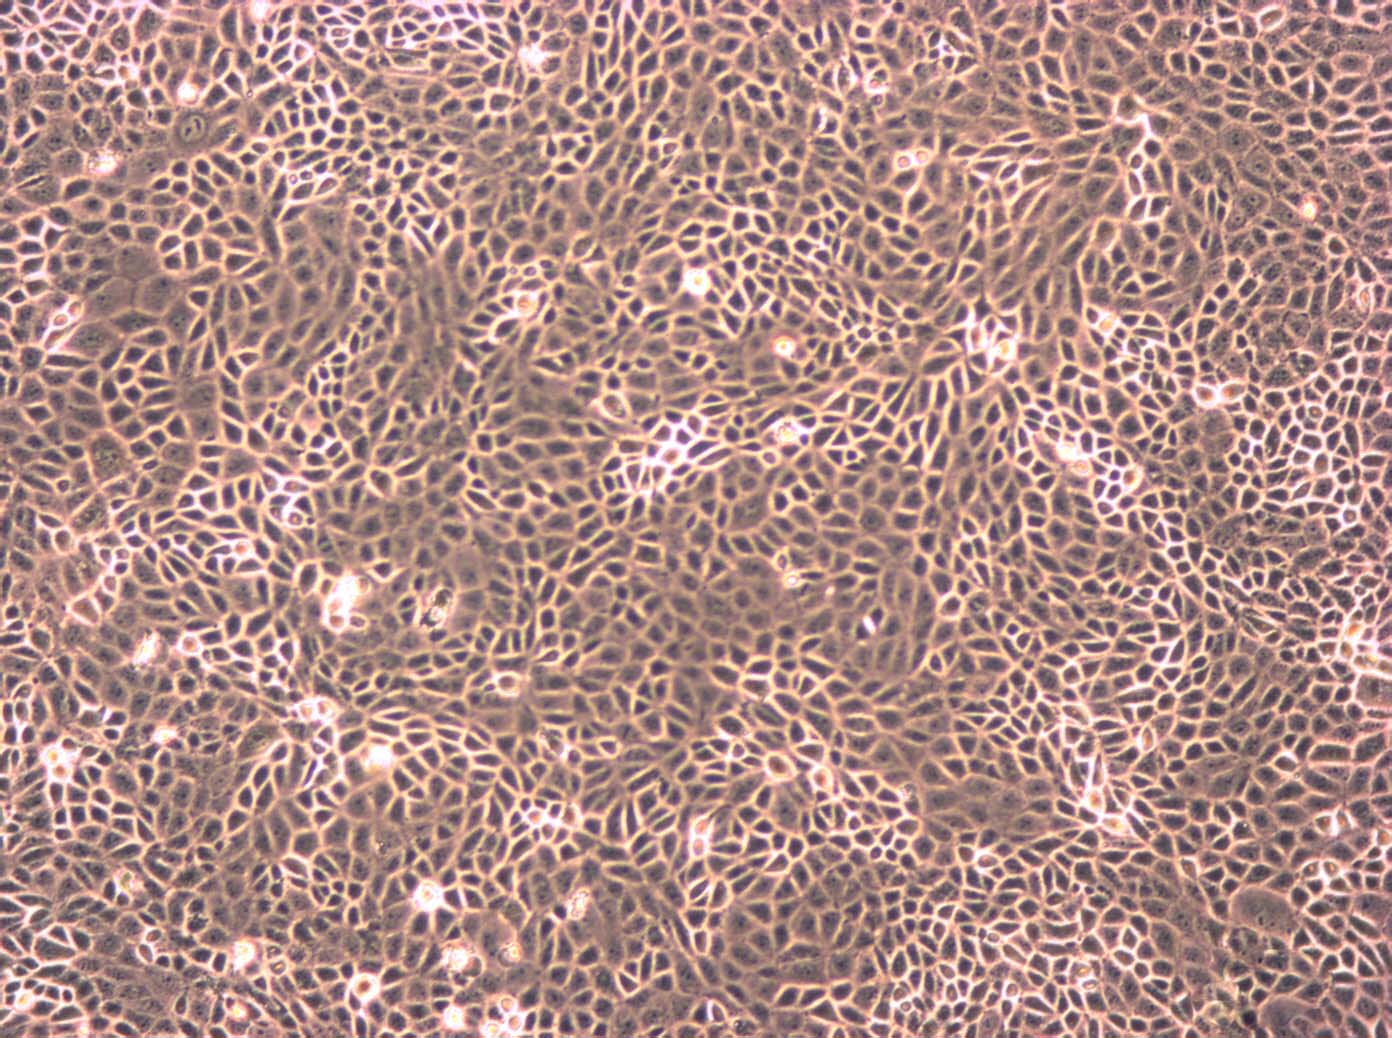 NCI-H1648 Cells|人肺癌需消化细胞系,NCI-H1648 Cells